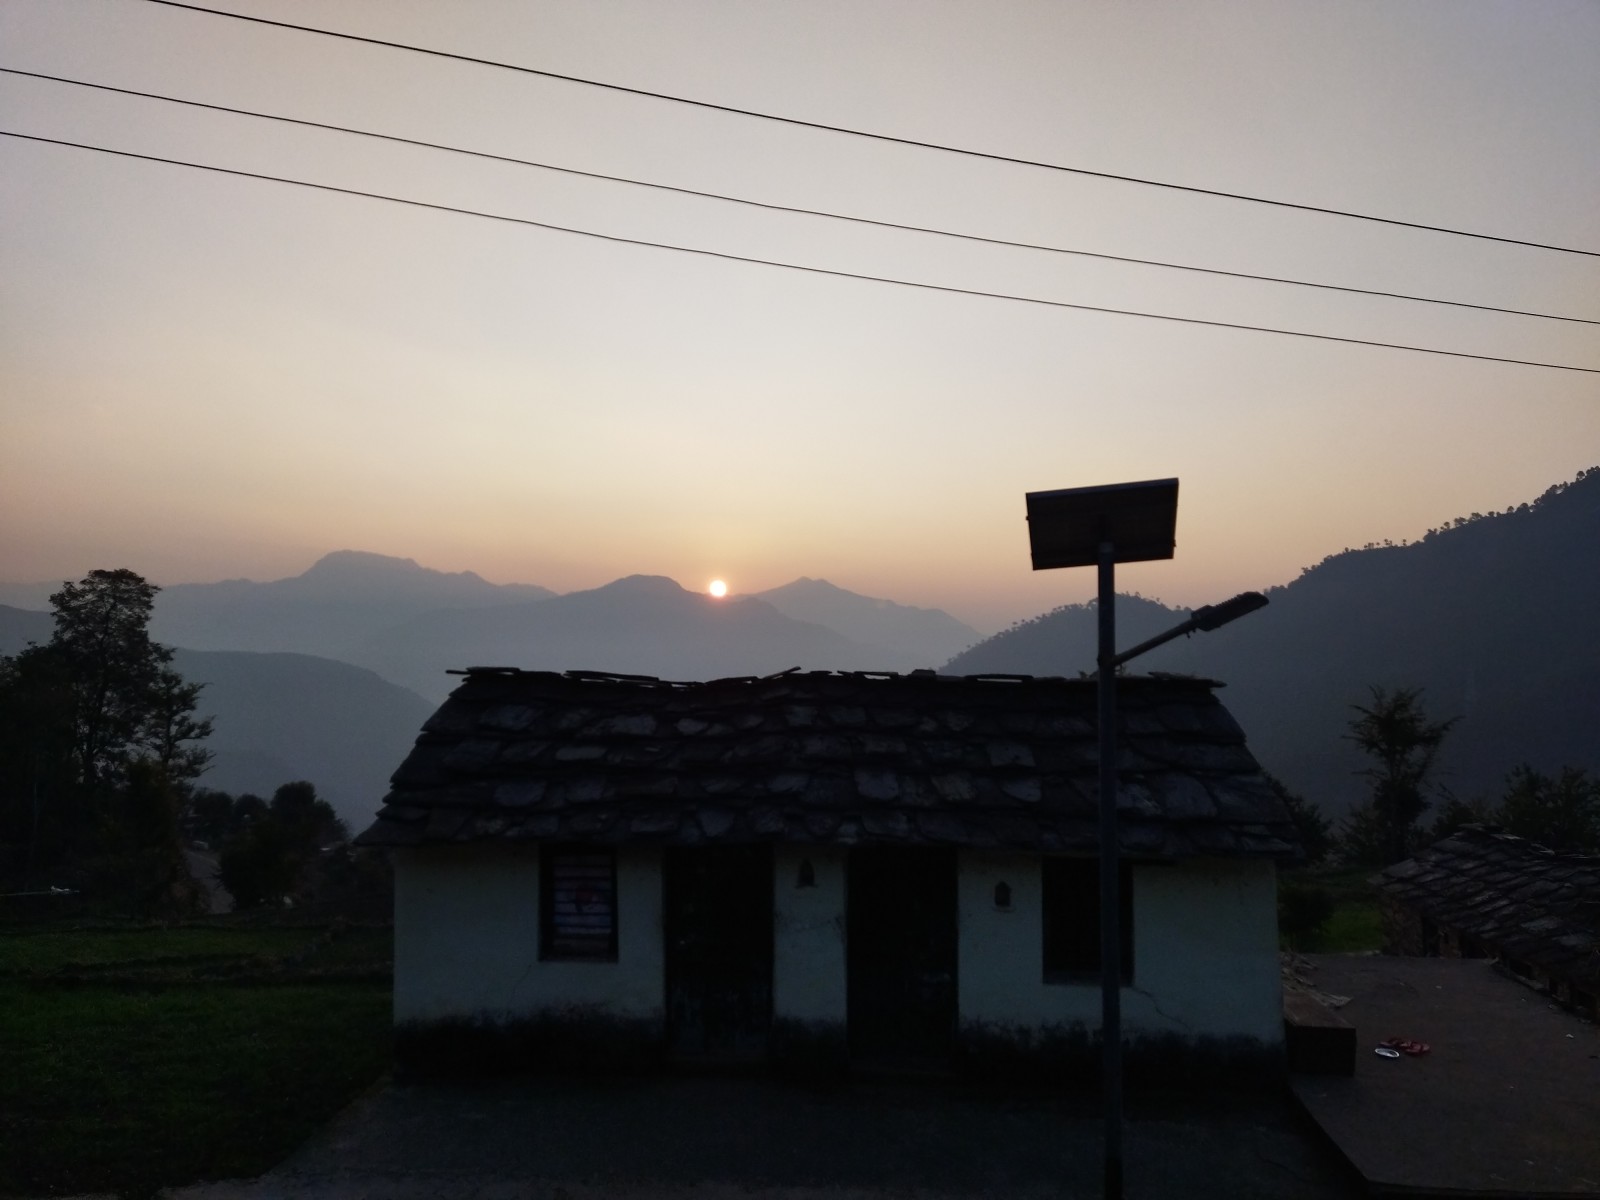 Munnadewal village, Rudraprayag